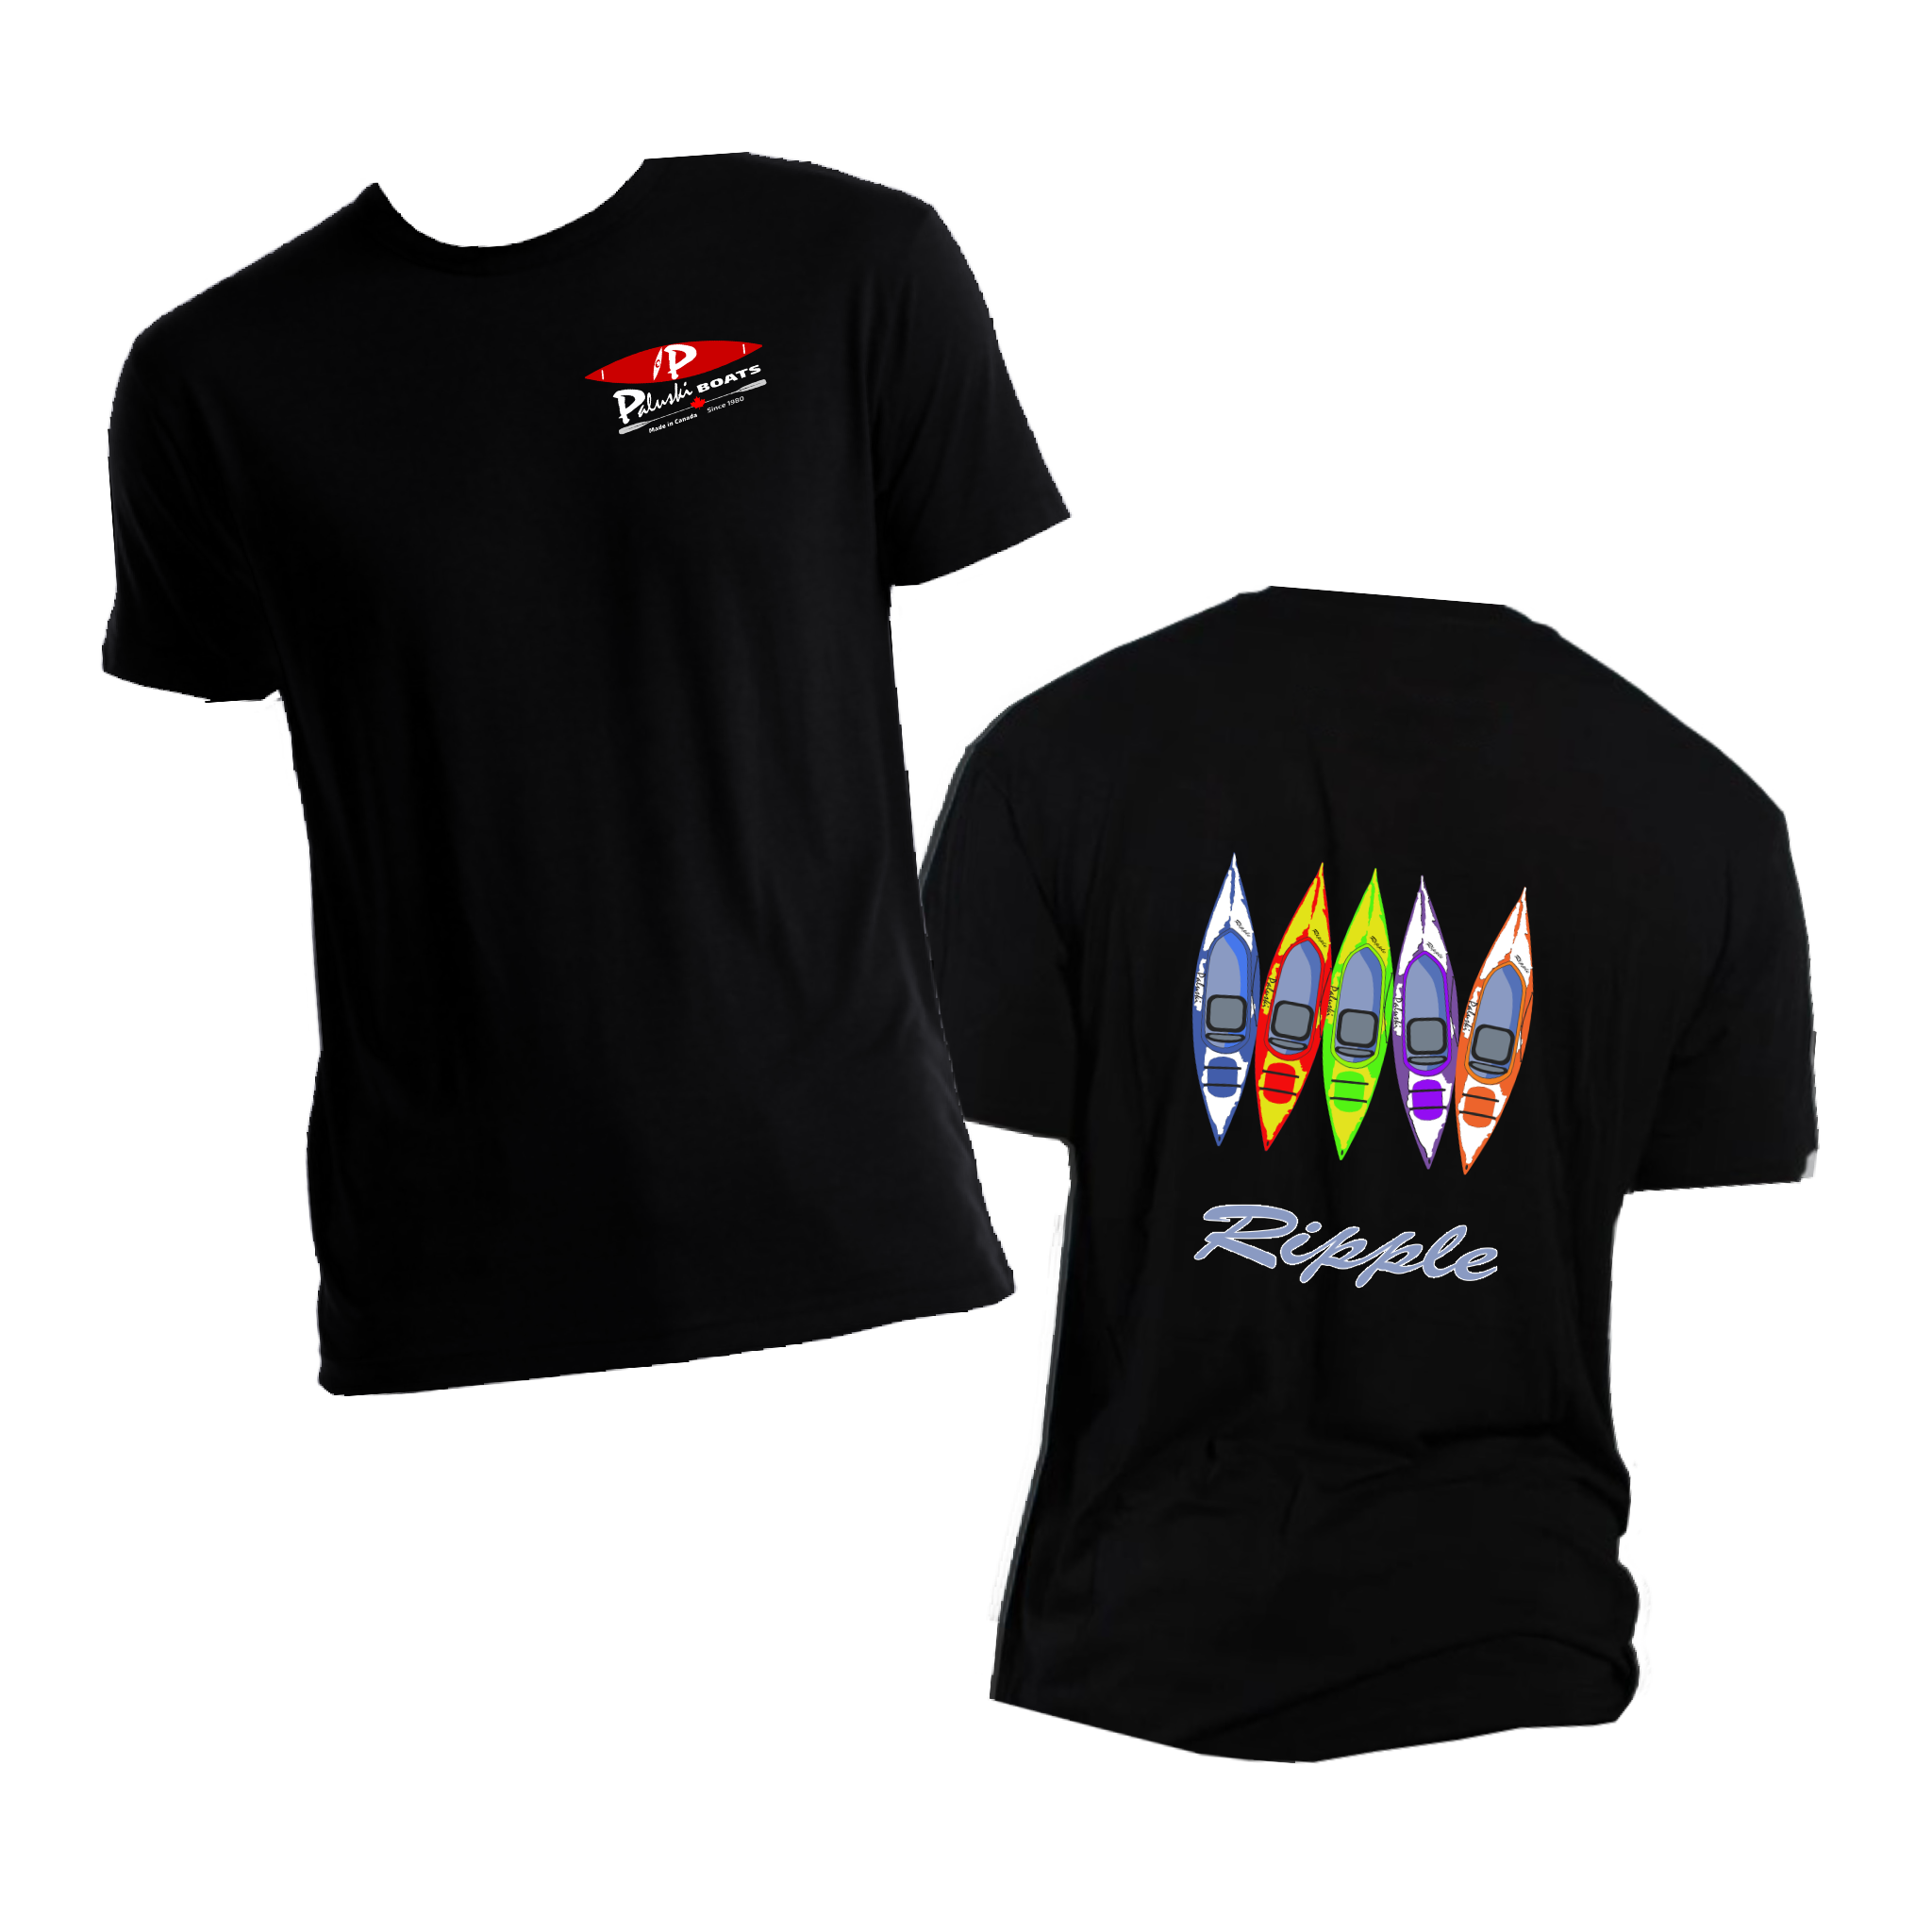 Paluski Ripple Kayaks Graphic T-Shirt | Unisex